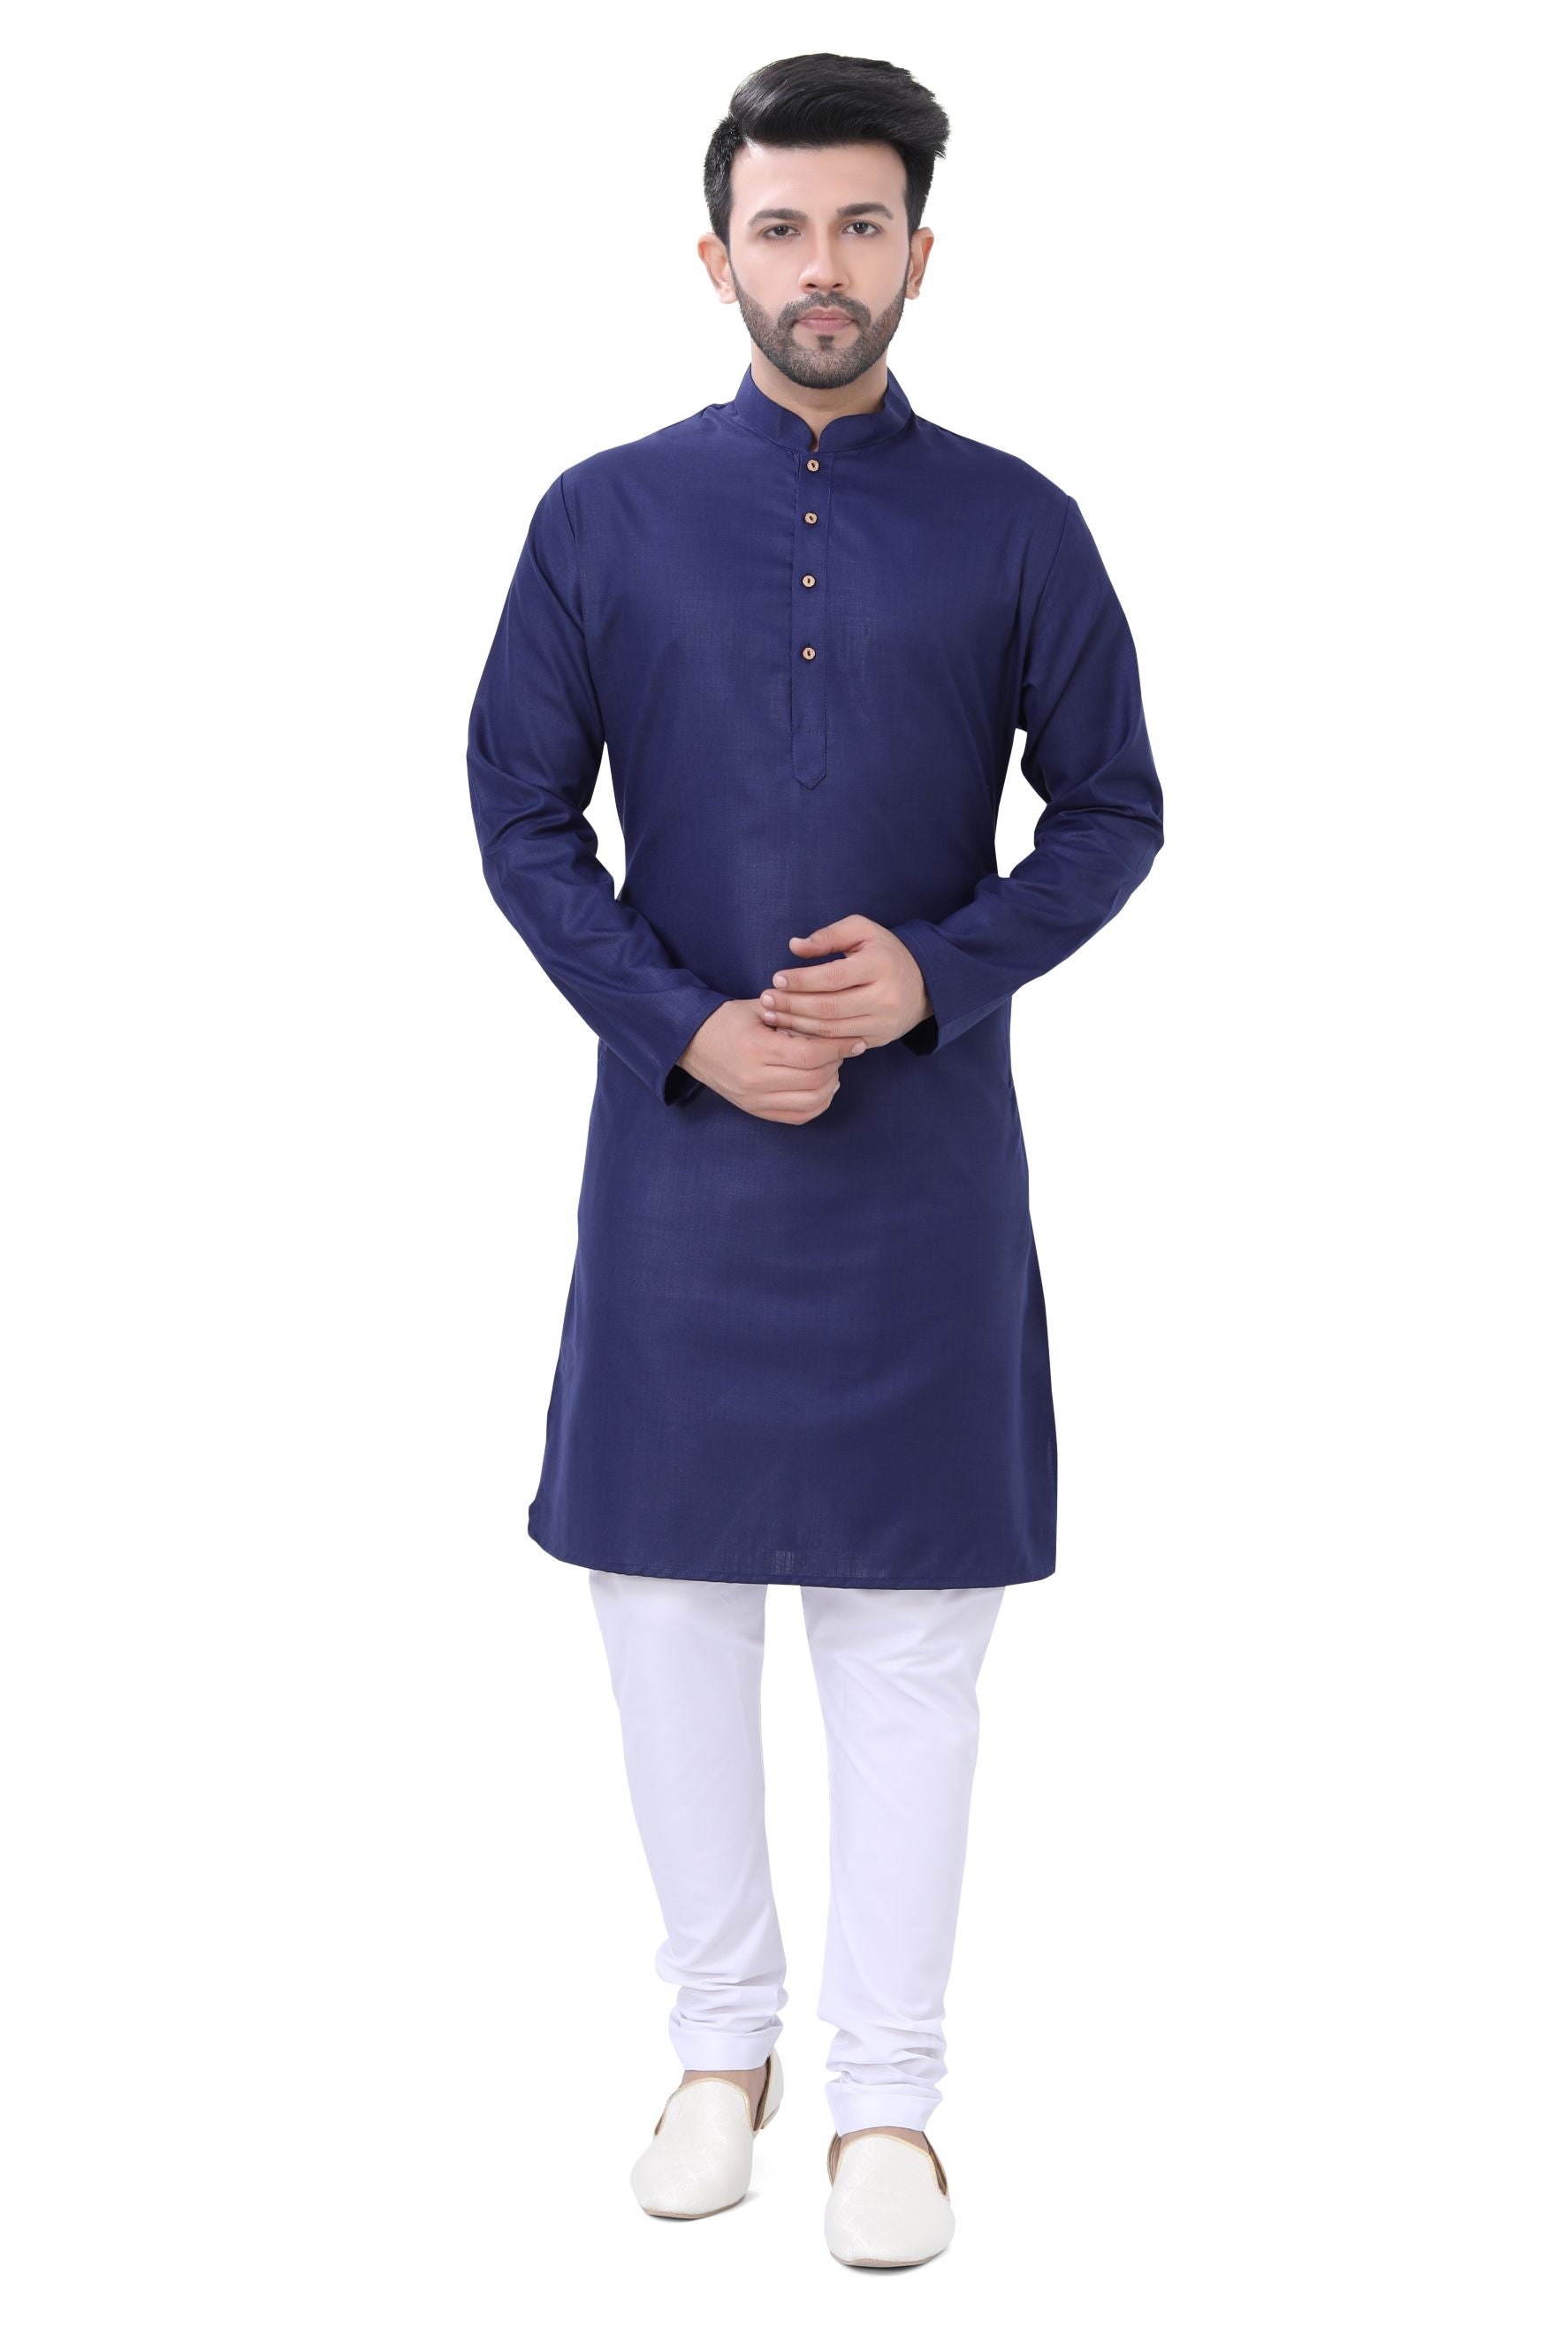 Plain Cotton Kurta in Navy Blue color - Premium kurta pajama from Dapper Ethnic - Just $29! Shop now at Dulhan Exclusives